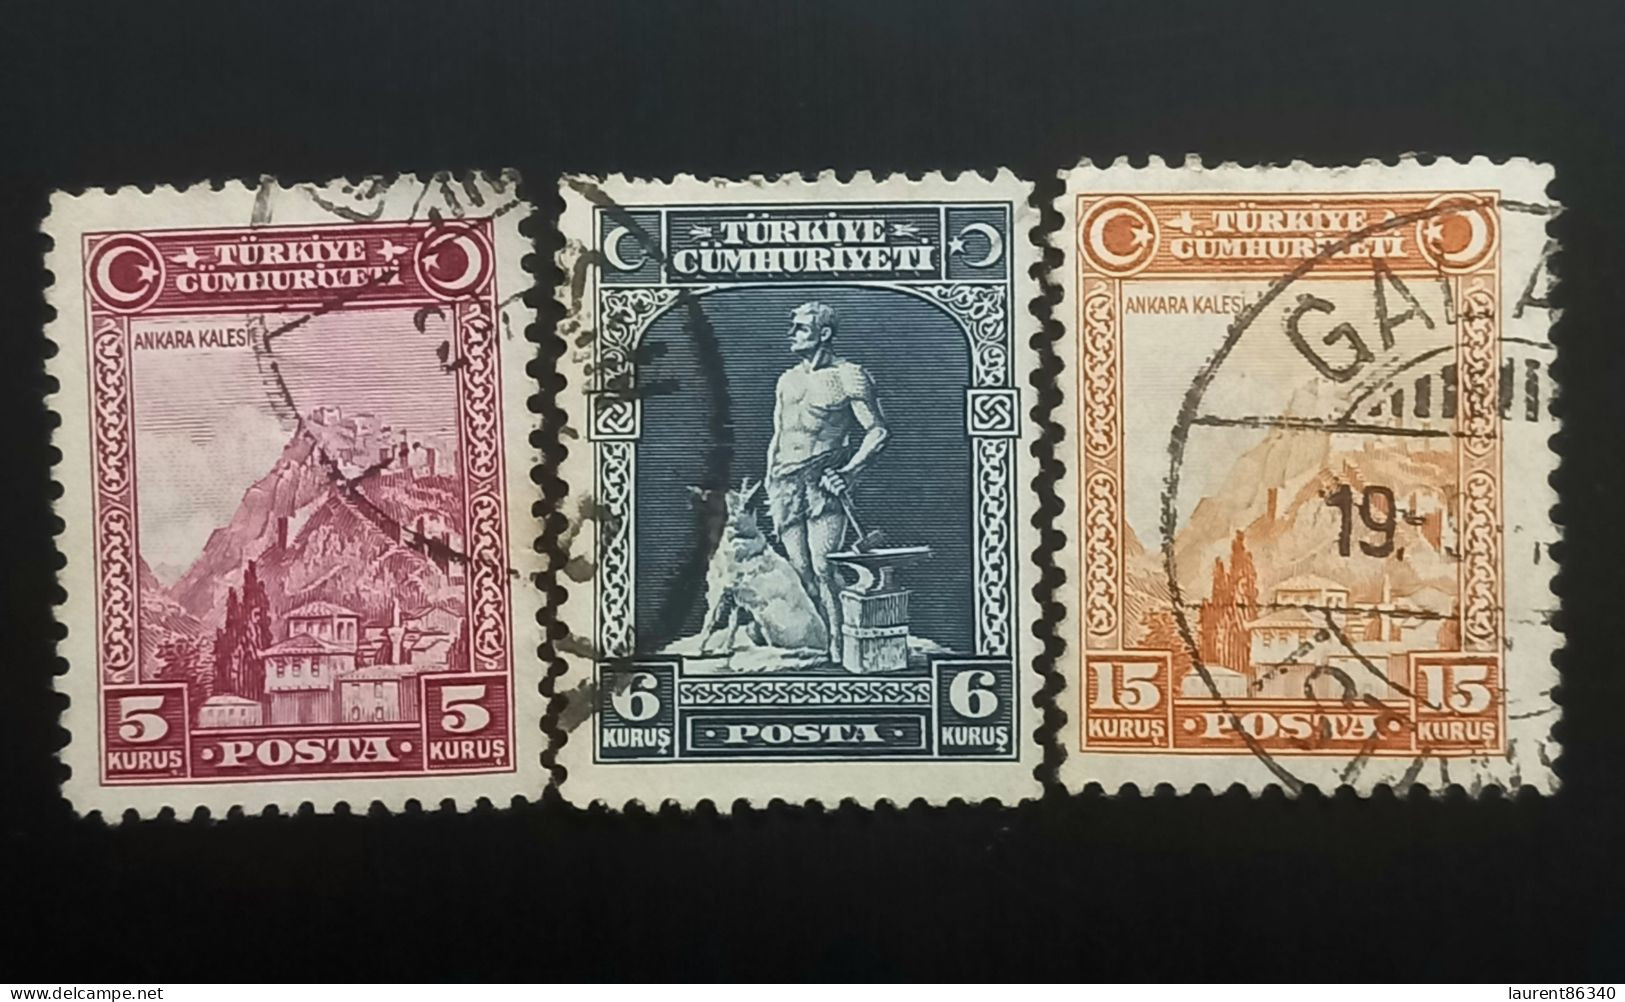 TURQUIE 1930 Inscription "TÜRKIYE CÜMHURIYETI" - "Ü" In "CÜMHURIYETI" 3 Used Stamps - Gebraucht